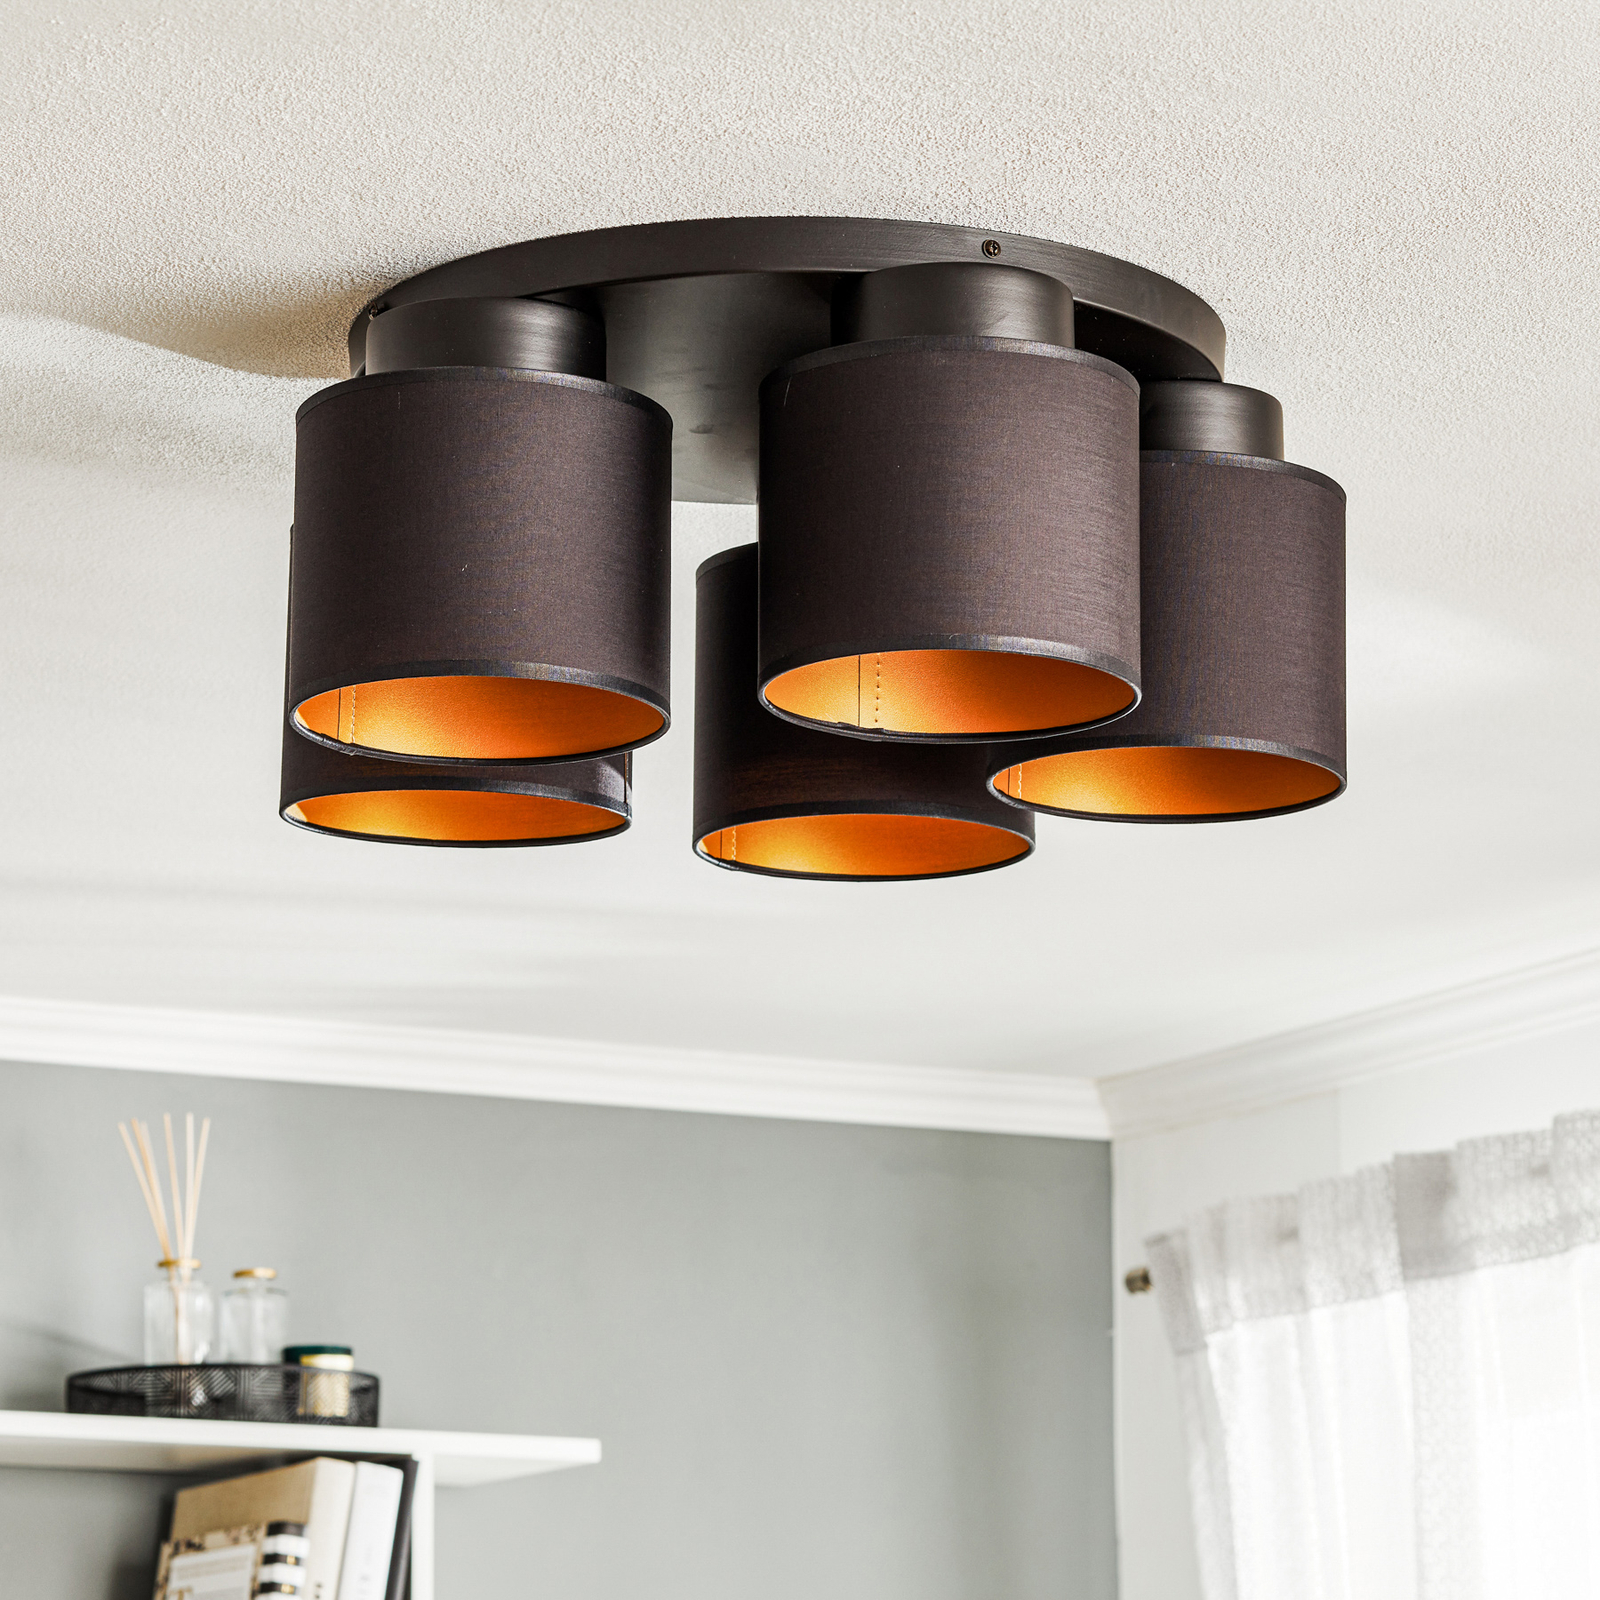 Soho ceiling light cylindrical 5-bulb black/gold